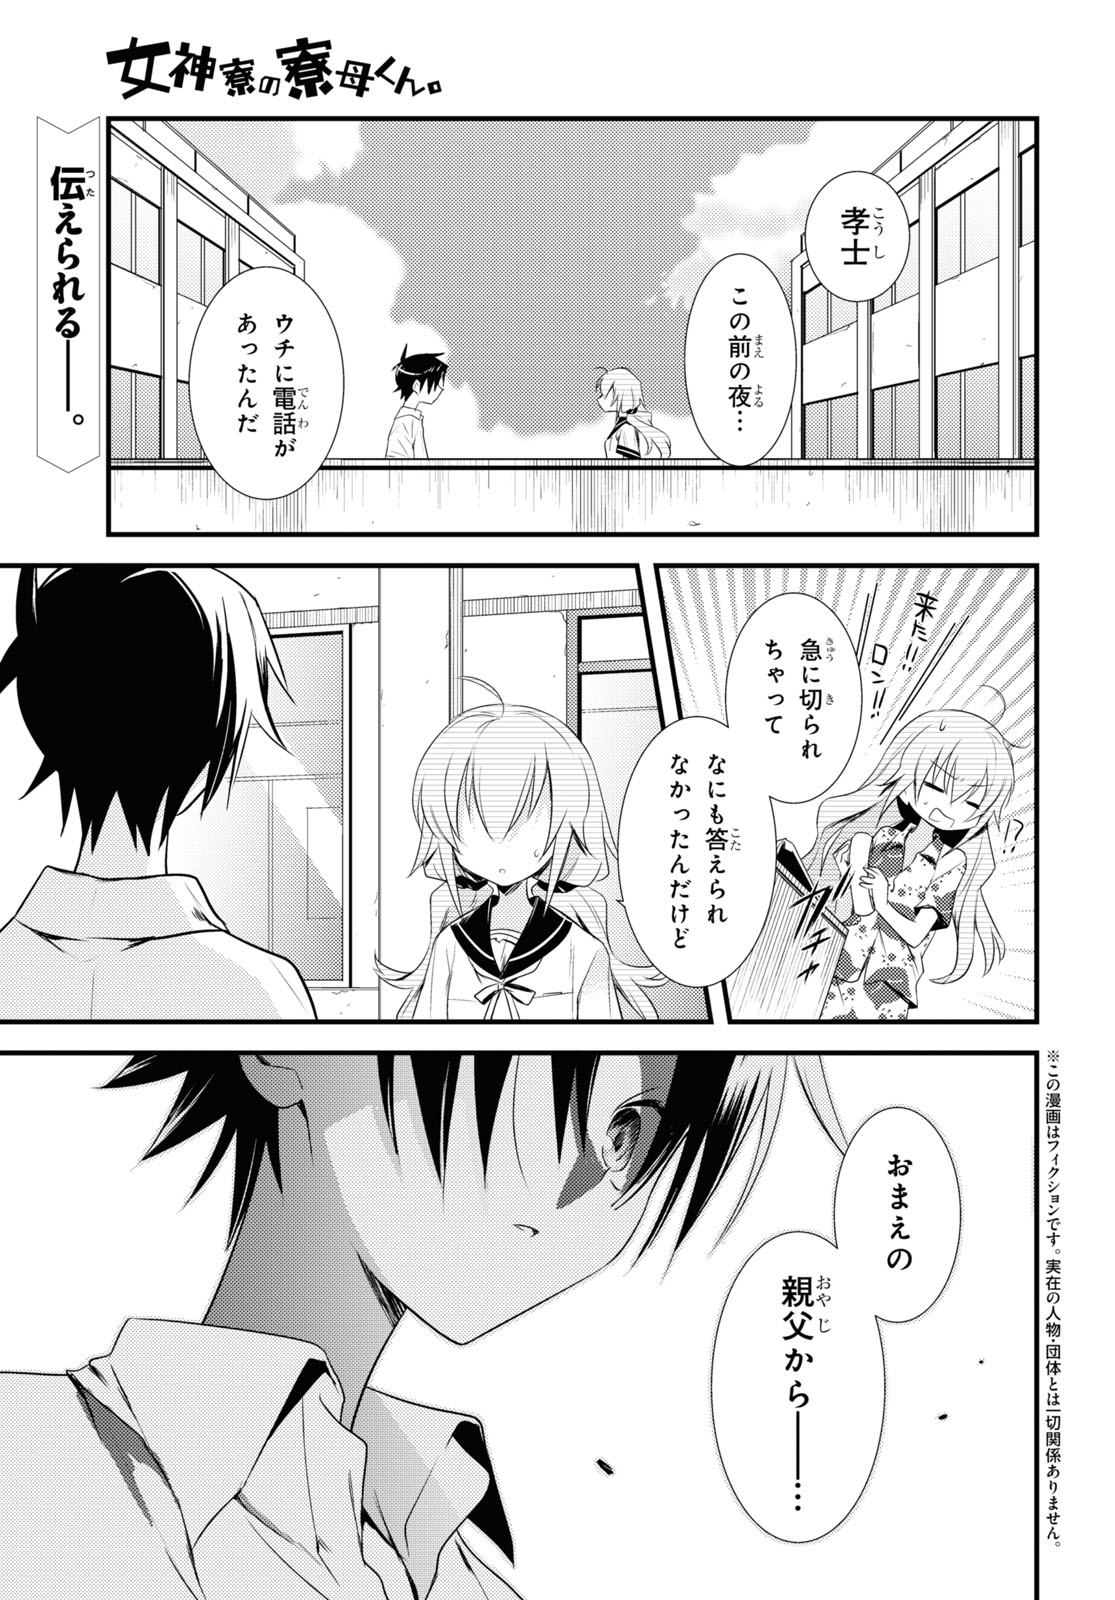 Megami-ryou no Ryoubo-kun - Chapter 41 - Page 1